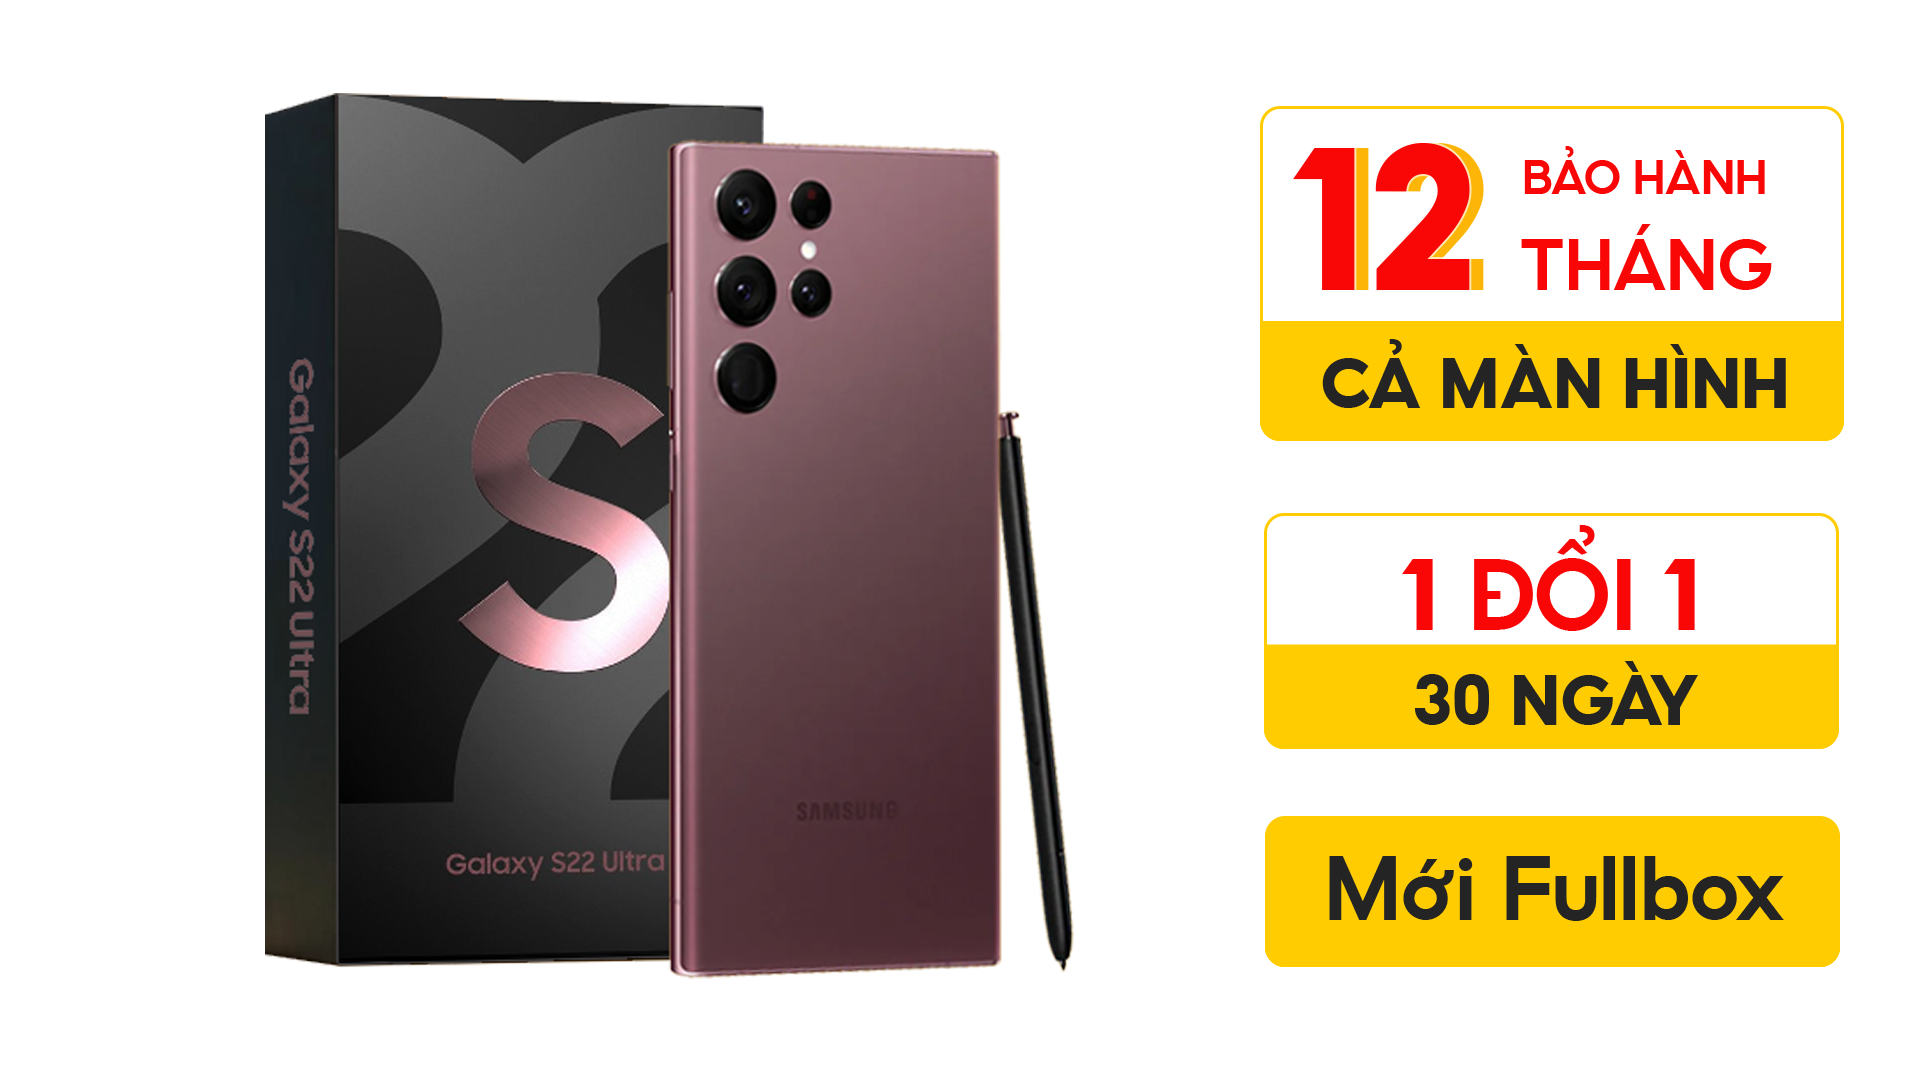 Samsung S22 Ultra 5G Mỹ 12G/512G - 2 Sim, Mới Fullbox